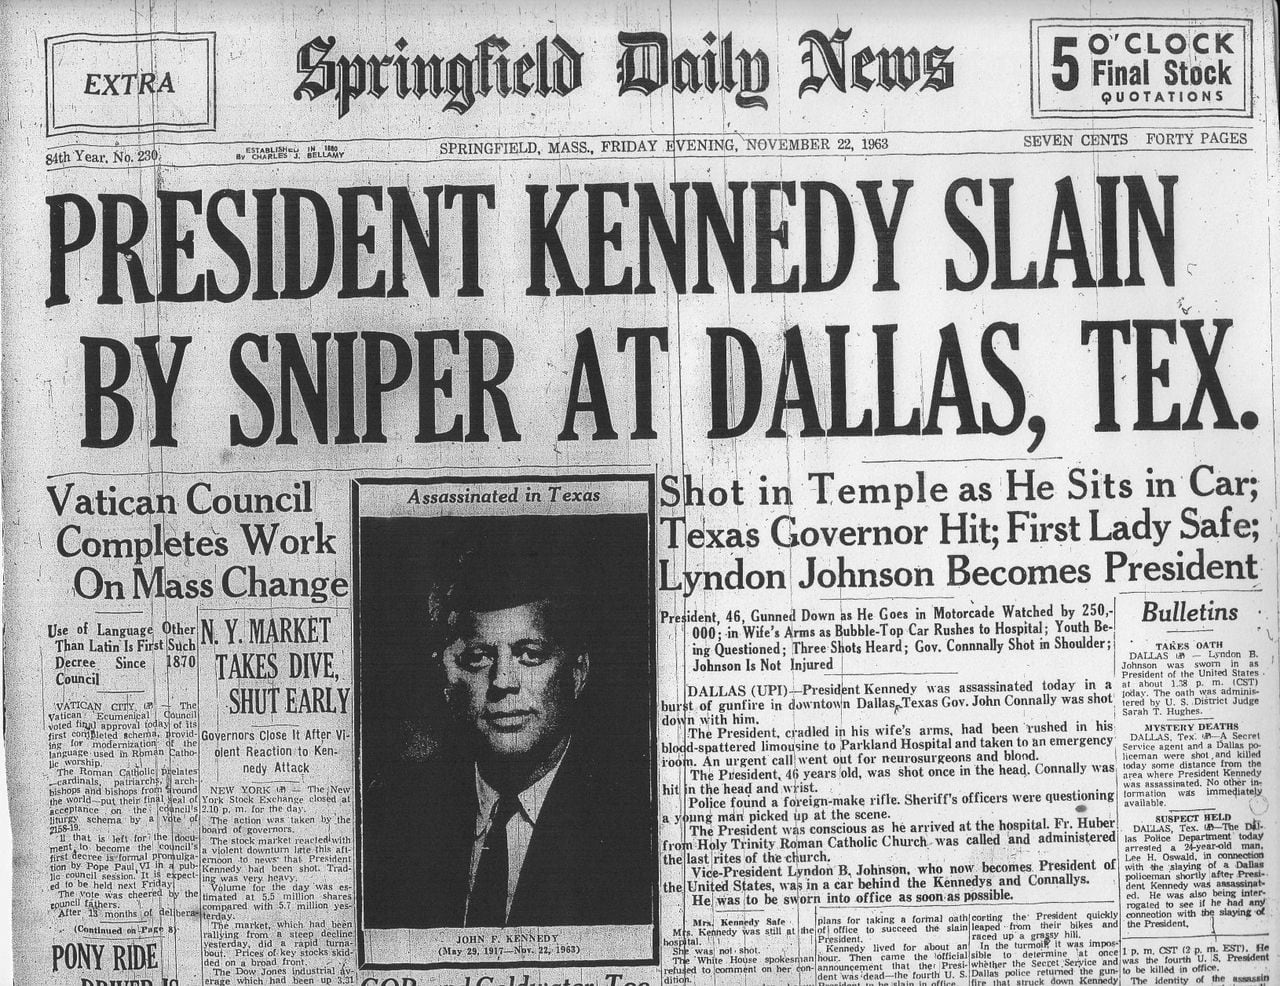 Kennedy Springfield assassination